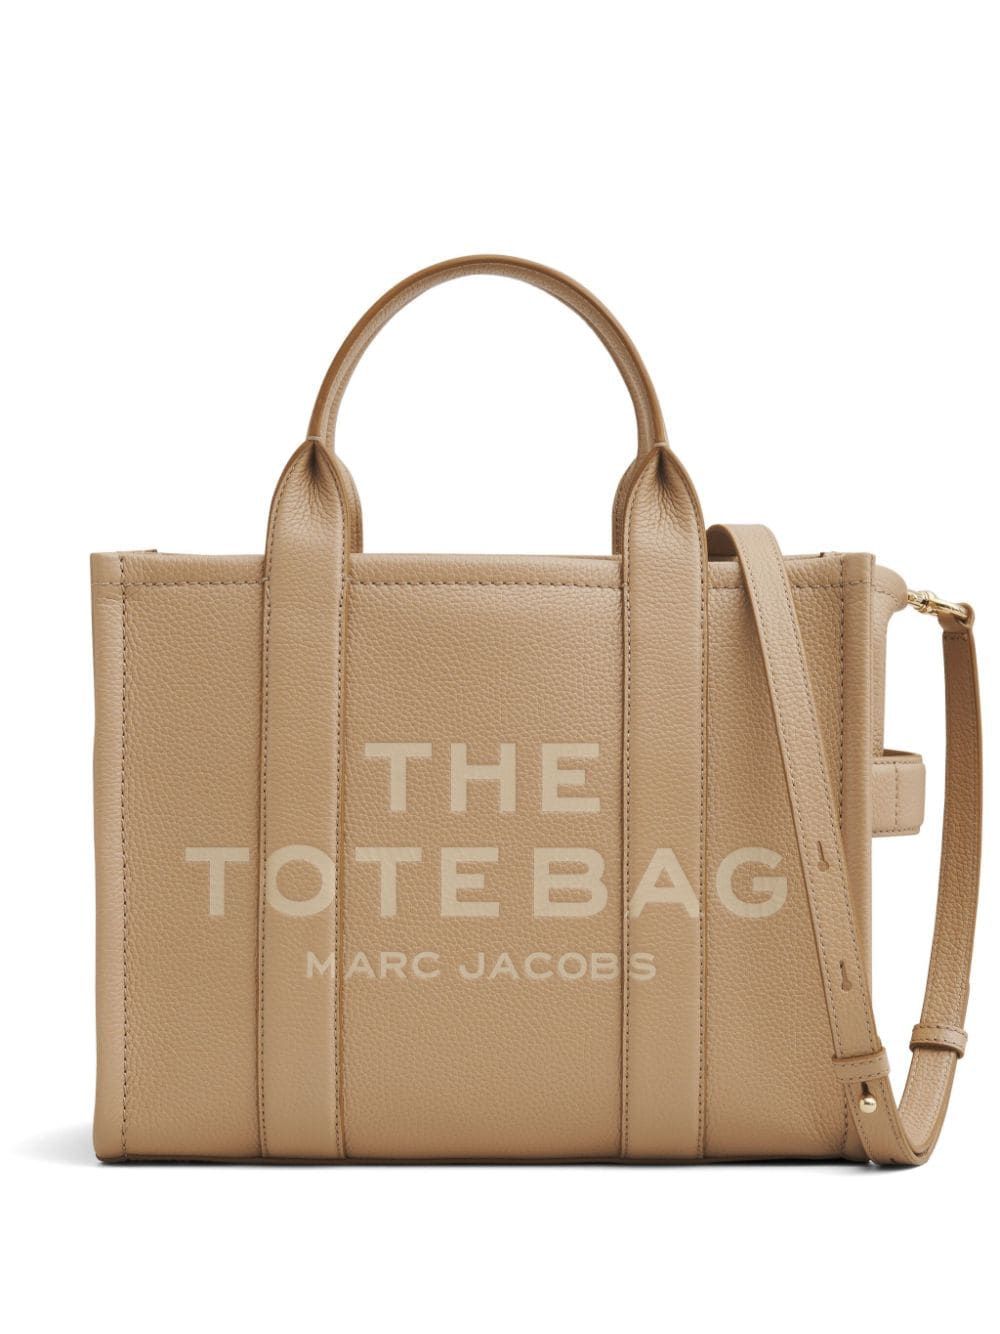 MARC JACOBS Beige 100% Cow Leather Medium Tote Handbag for Women, 33cm x 25cm x 14cm